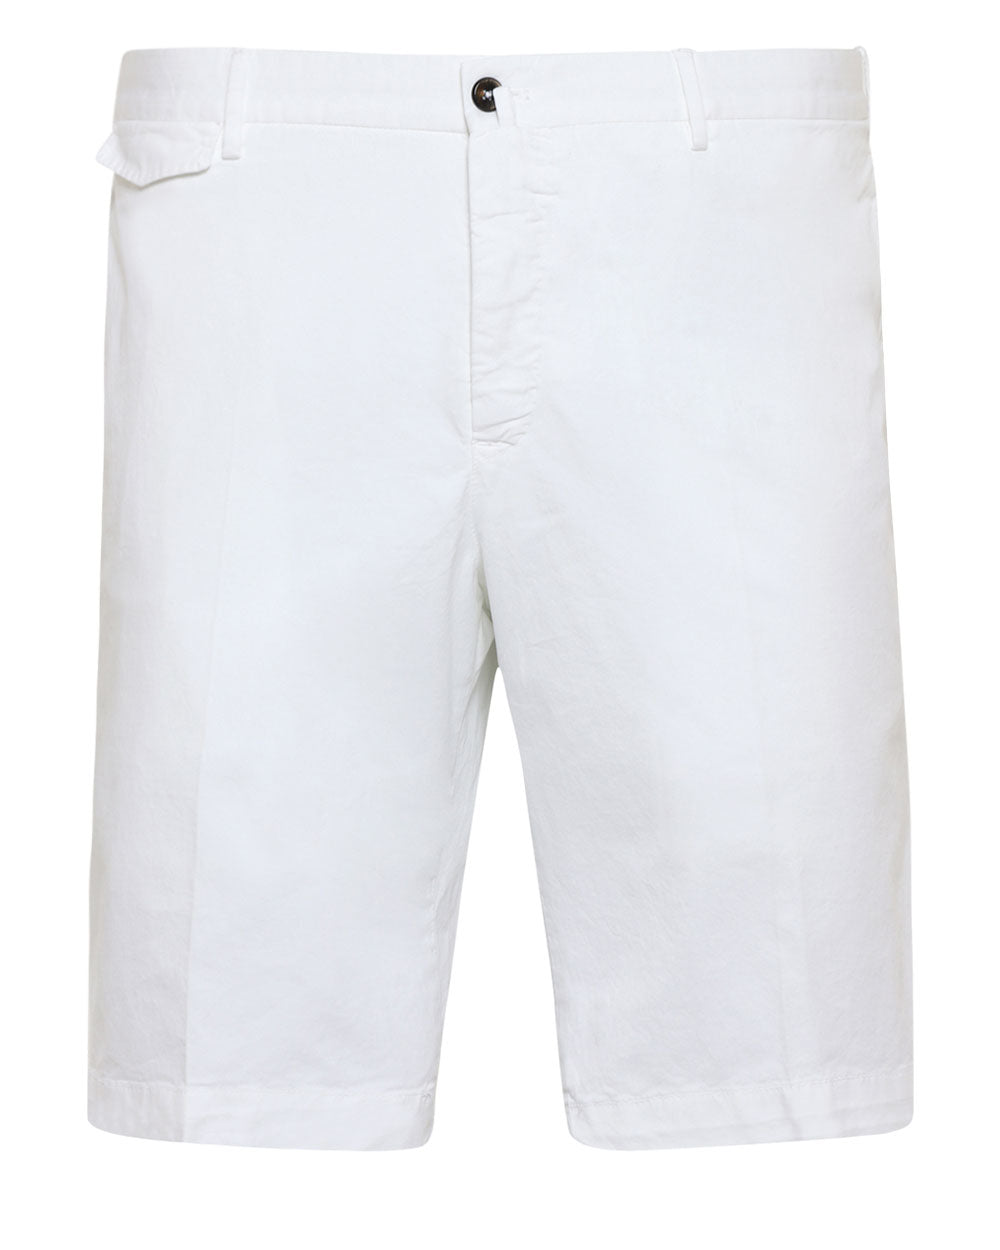 White Cotton Blend Stretch Bermuda Short